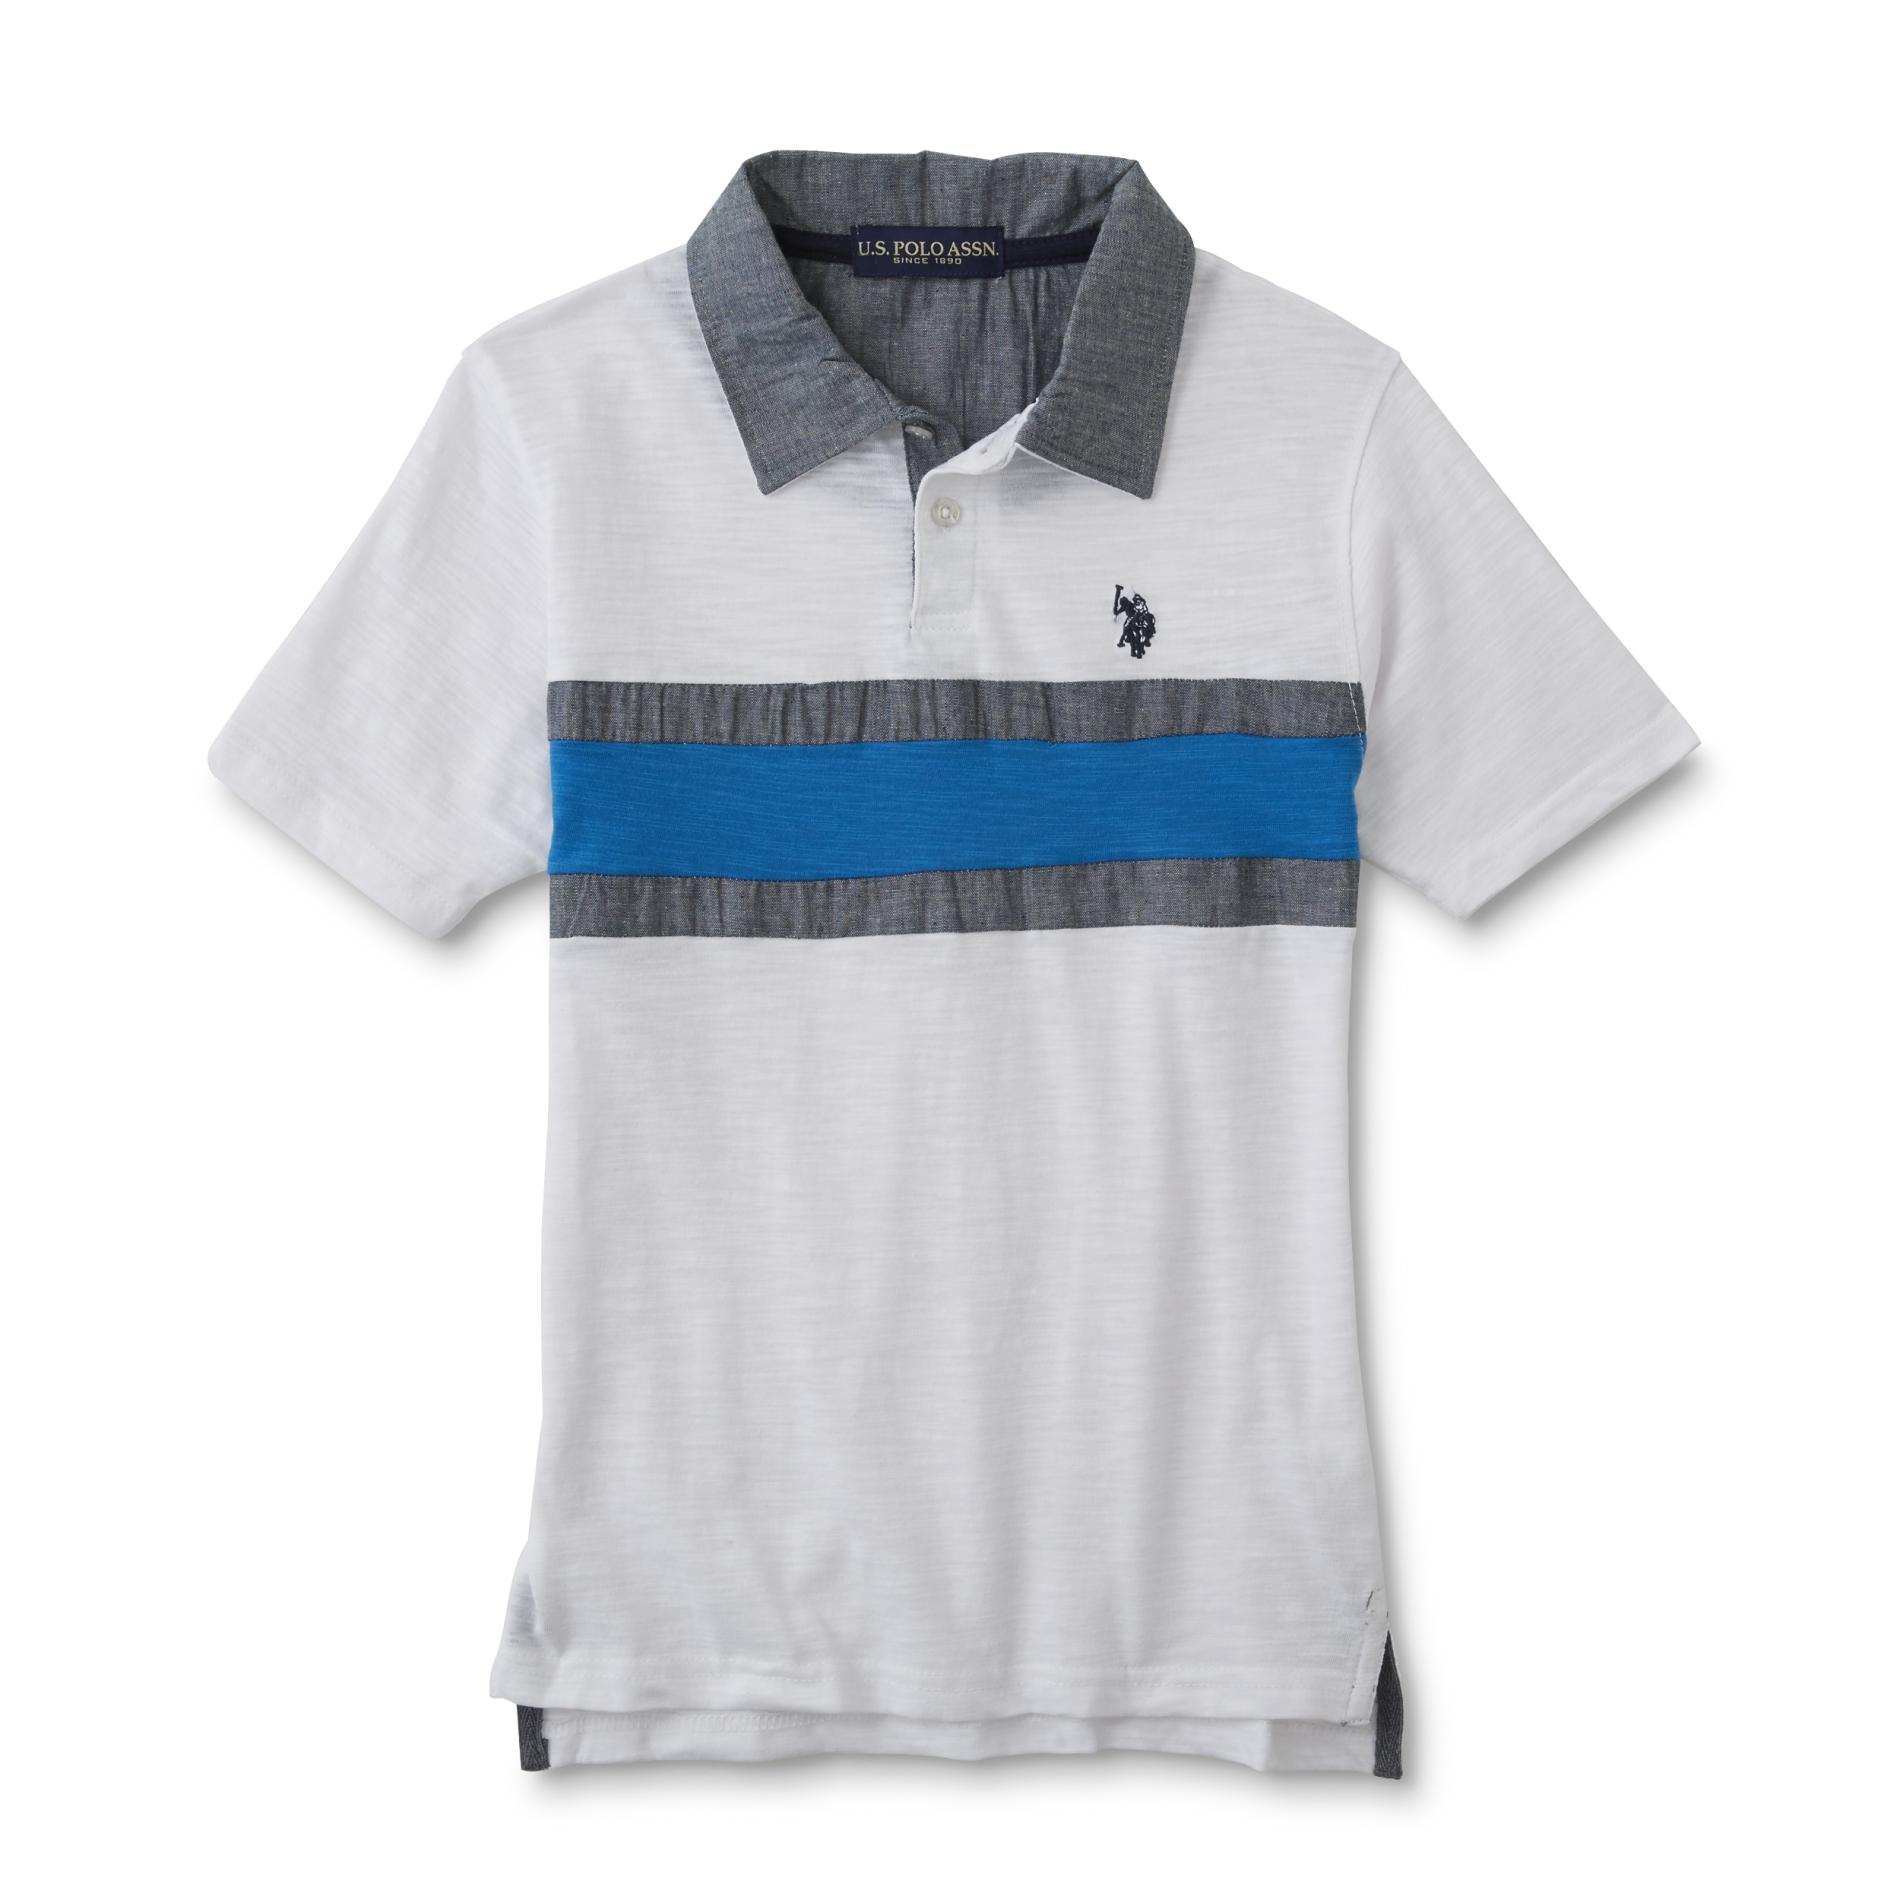 U.S. Polo Assn. Boys' Short-Sleeve Polo Shirt - Striped